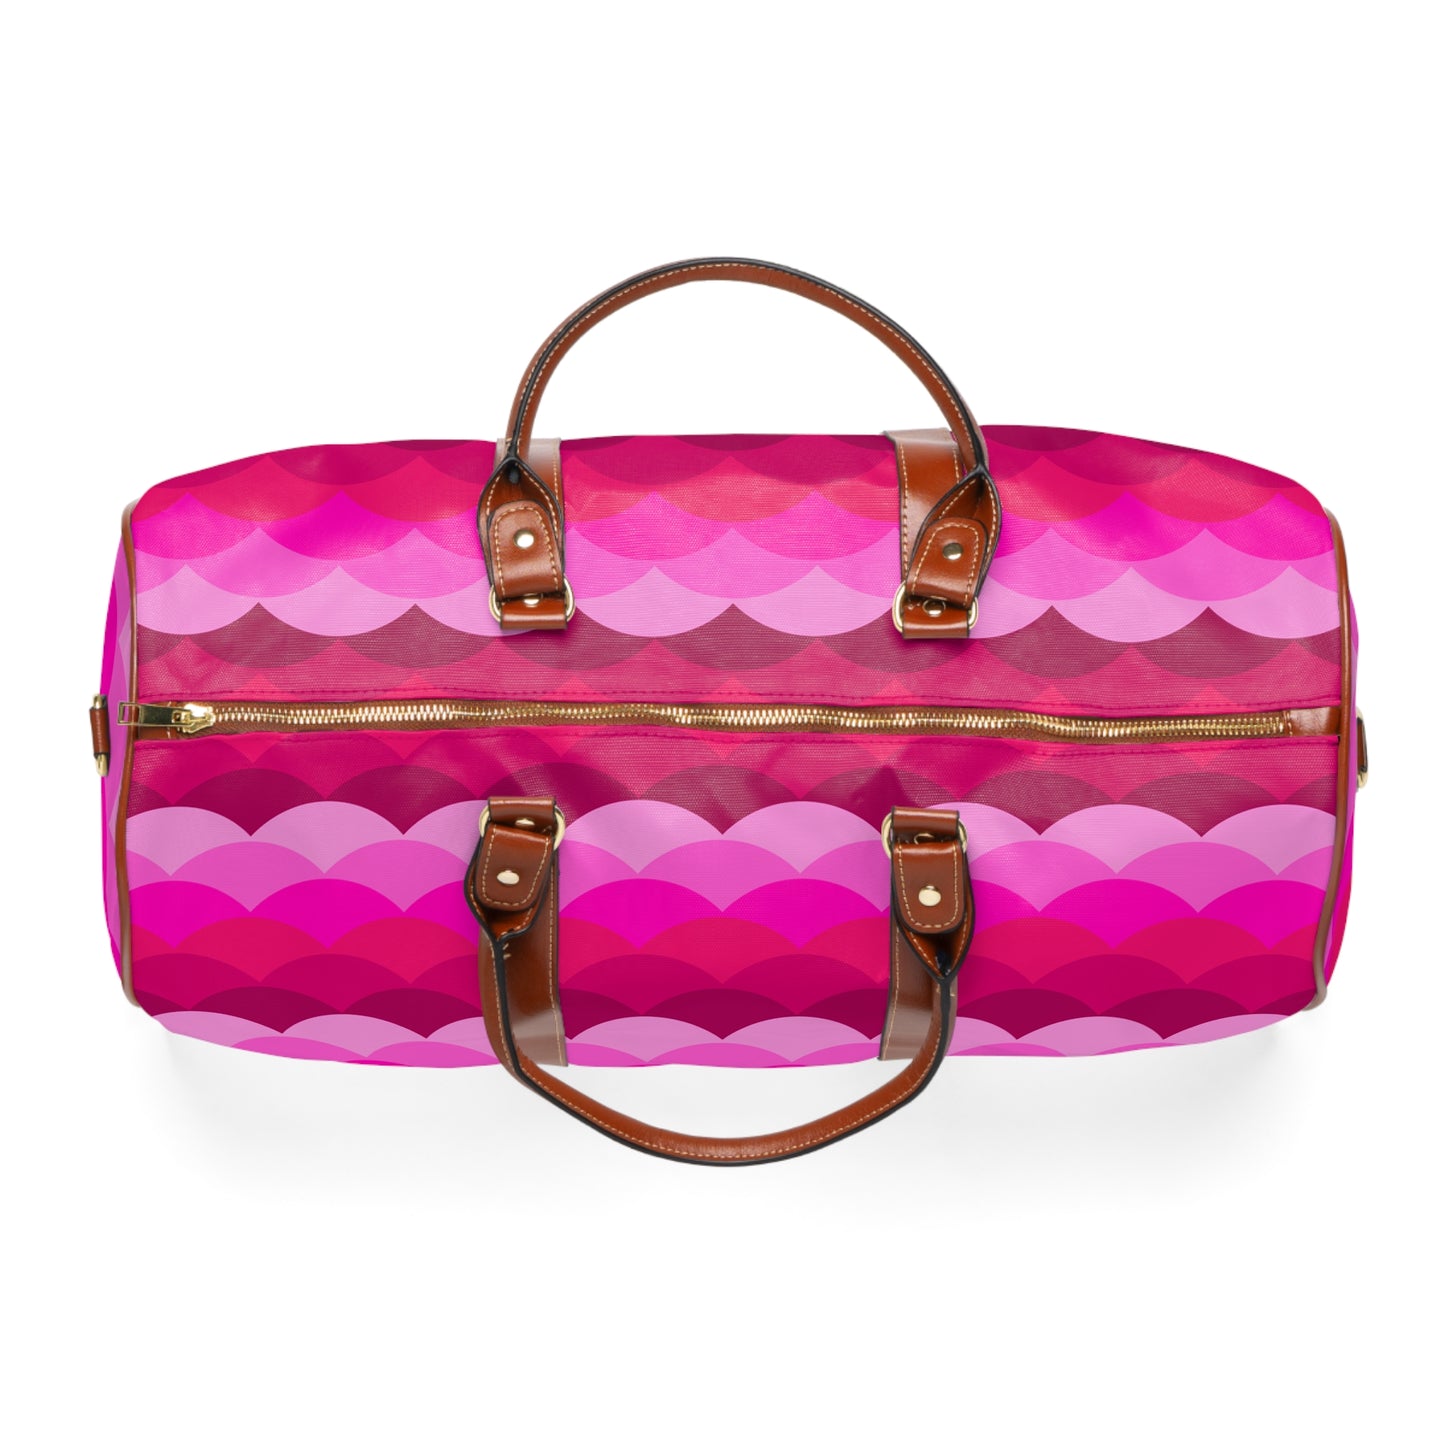 Variations on a Pink Rose - Waterproof Travel Bag